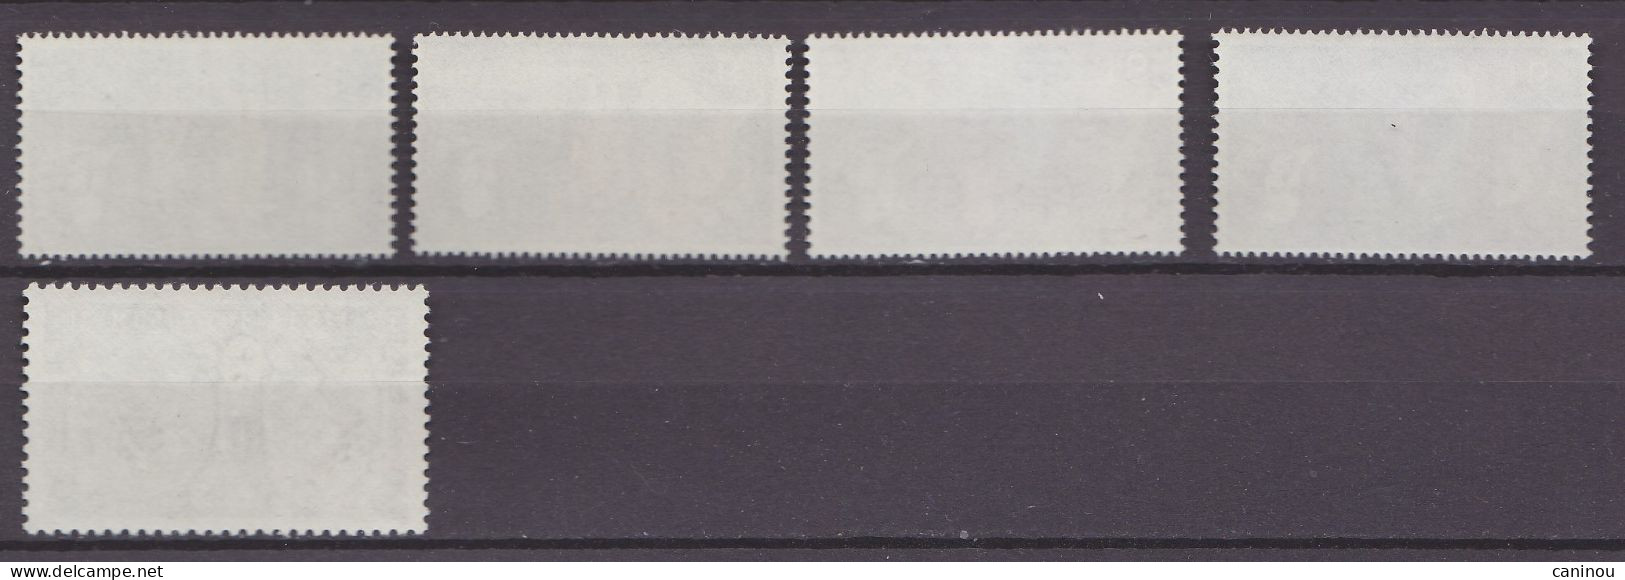 GRANDE BRETAGNE SHAKESPEARE 1964 Y & T 382 - 386 SANS  PHOSPHORE NEUFS SANS CHARNIERES - Unused Stamps